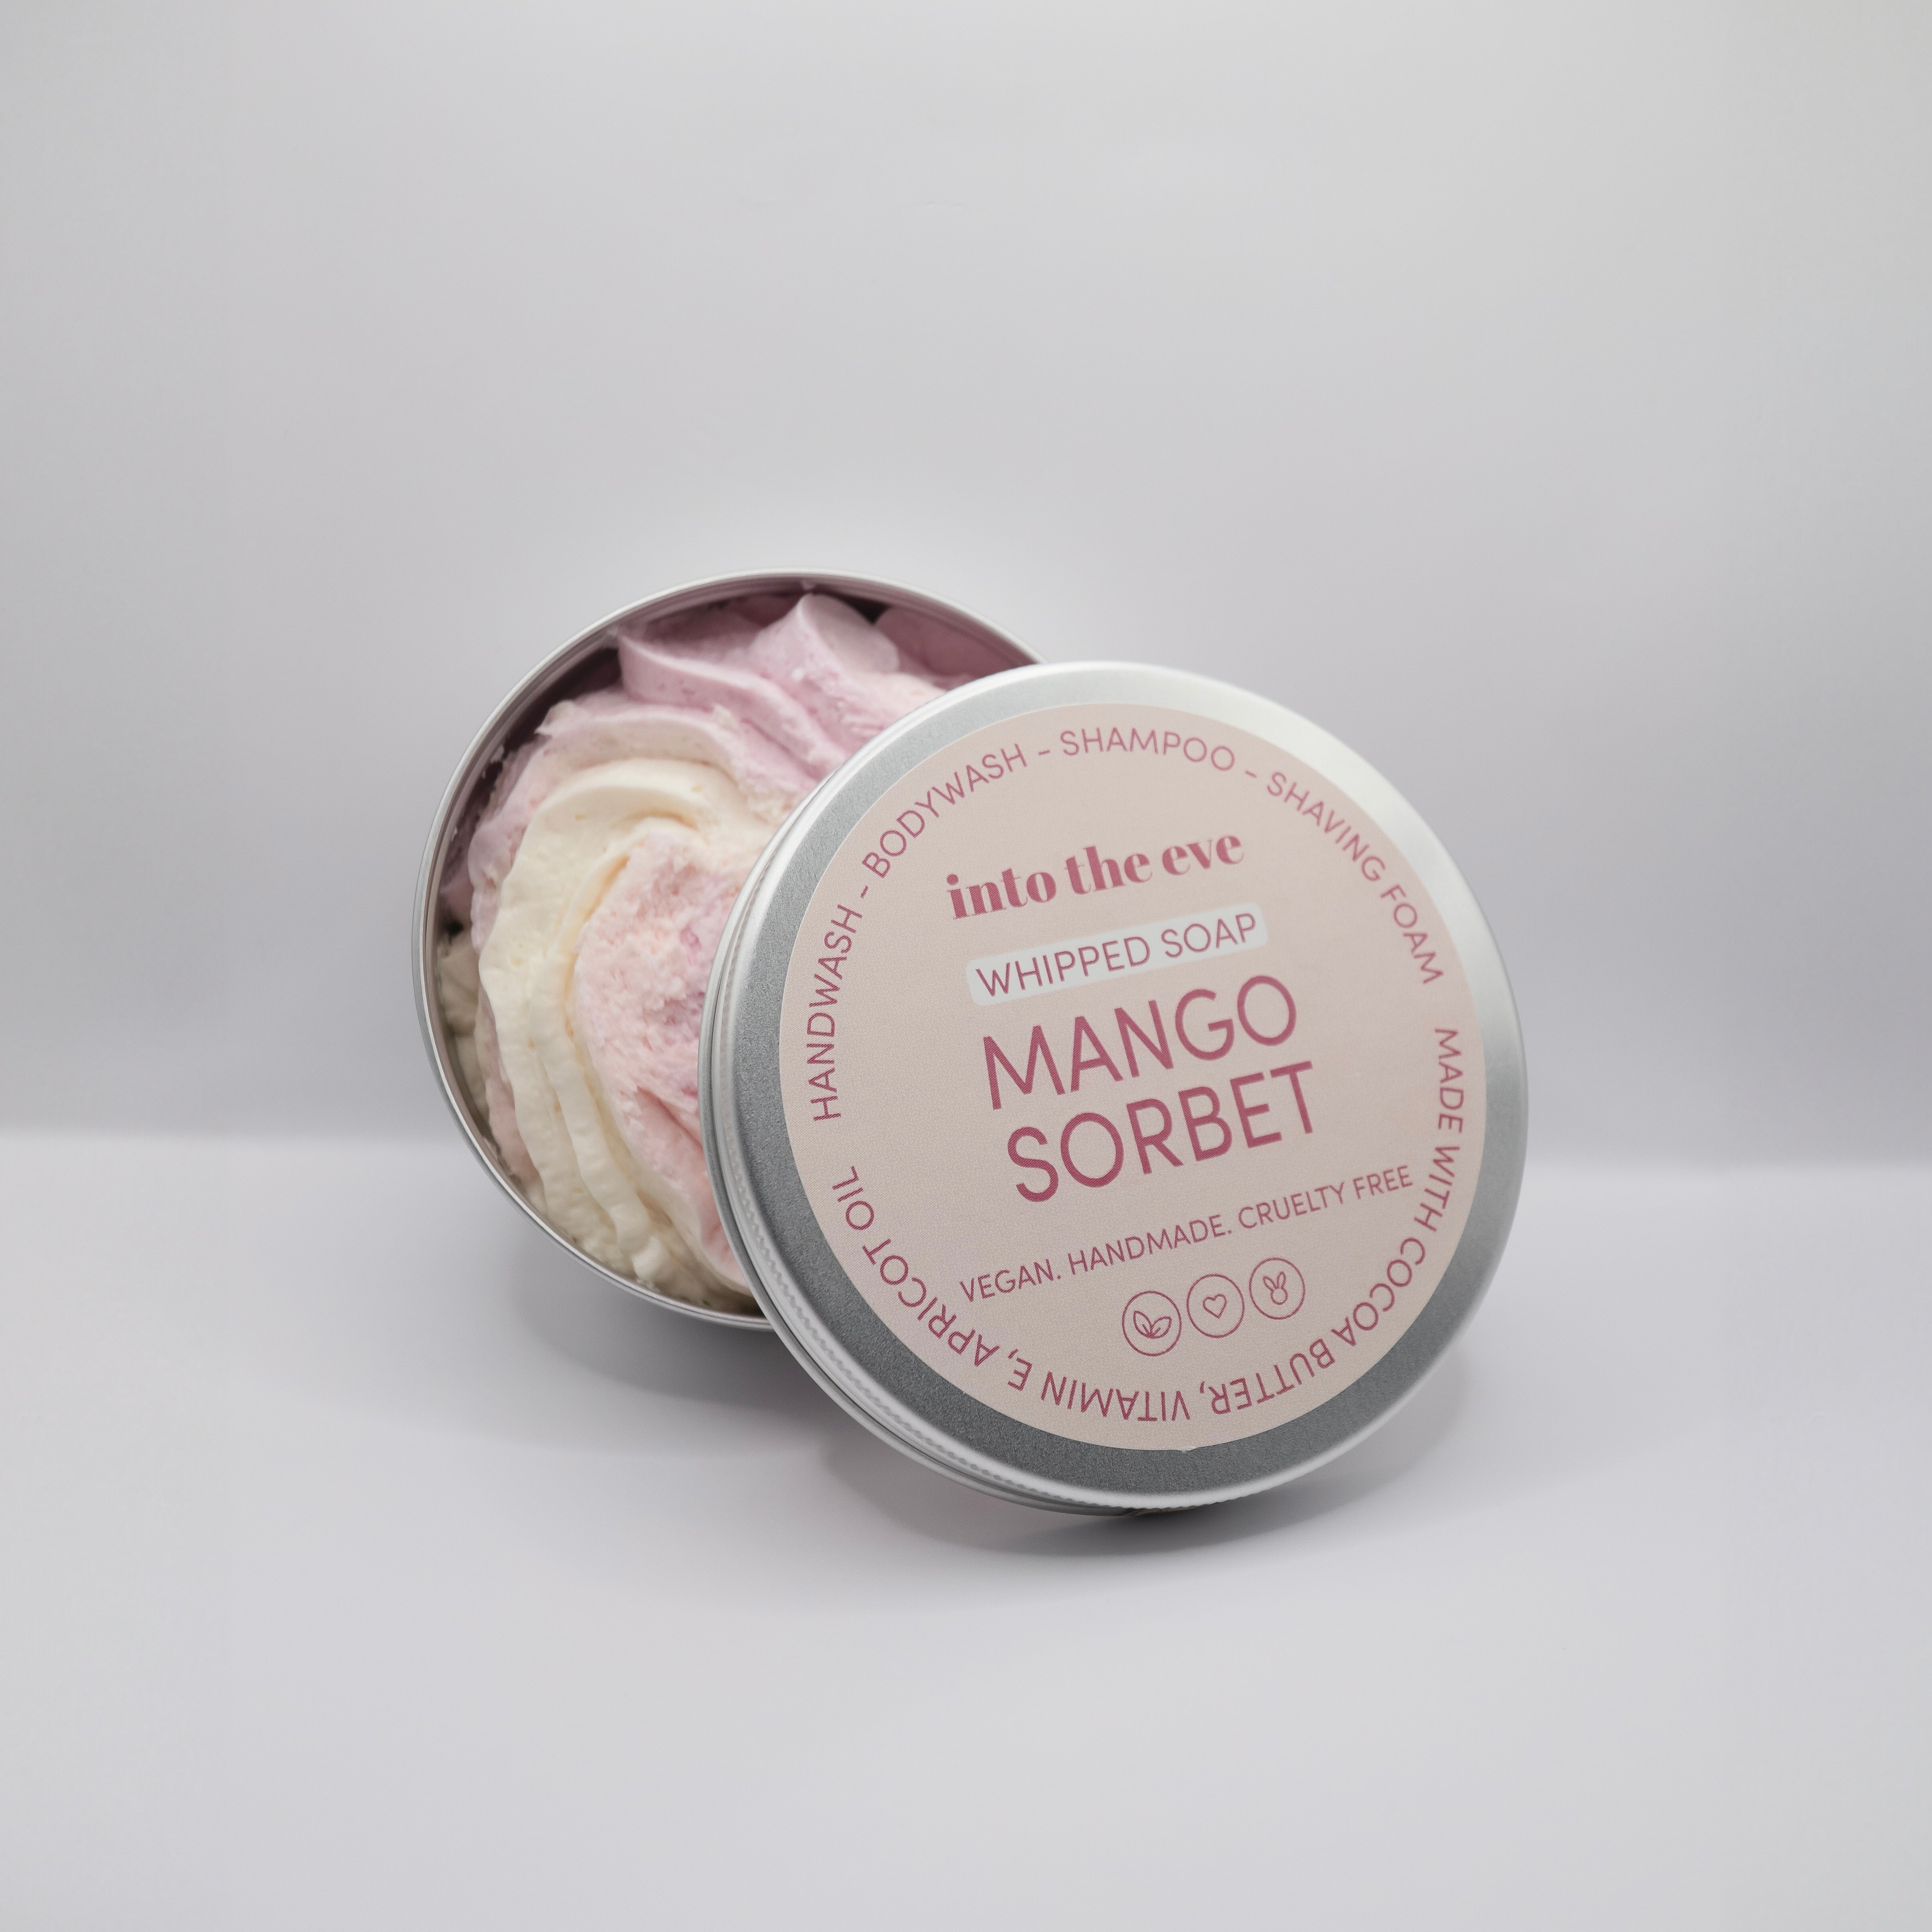 Mango Sorbet whipped soap